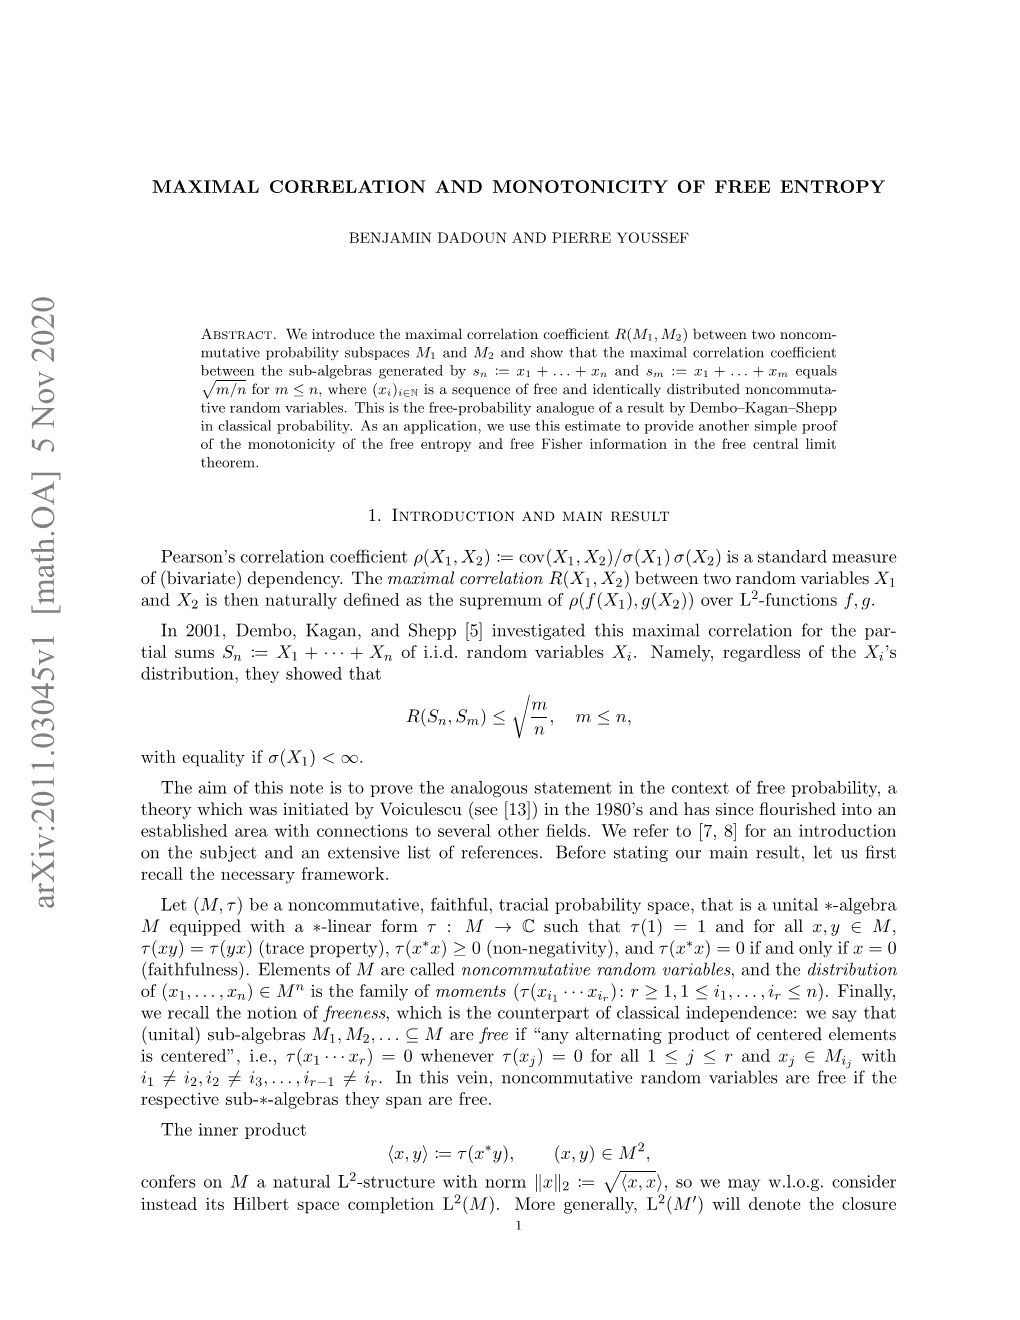 Maximal Correlation and Monotonicity of Free Entropy 3